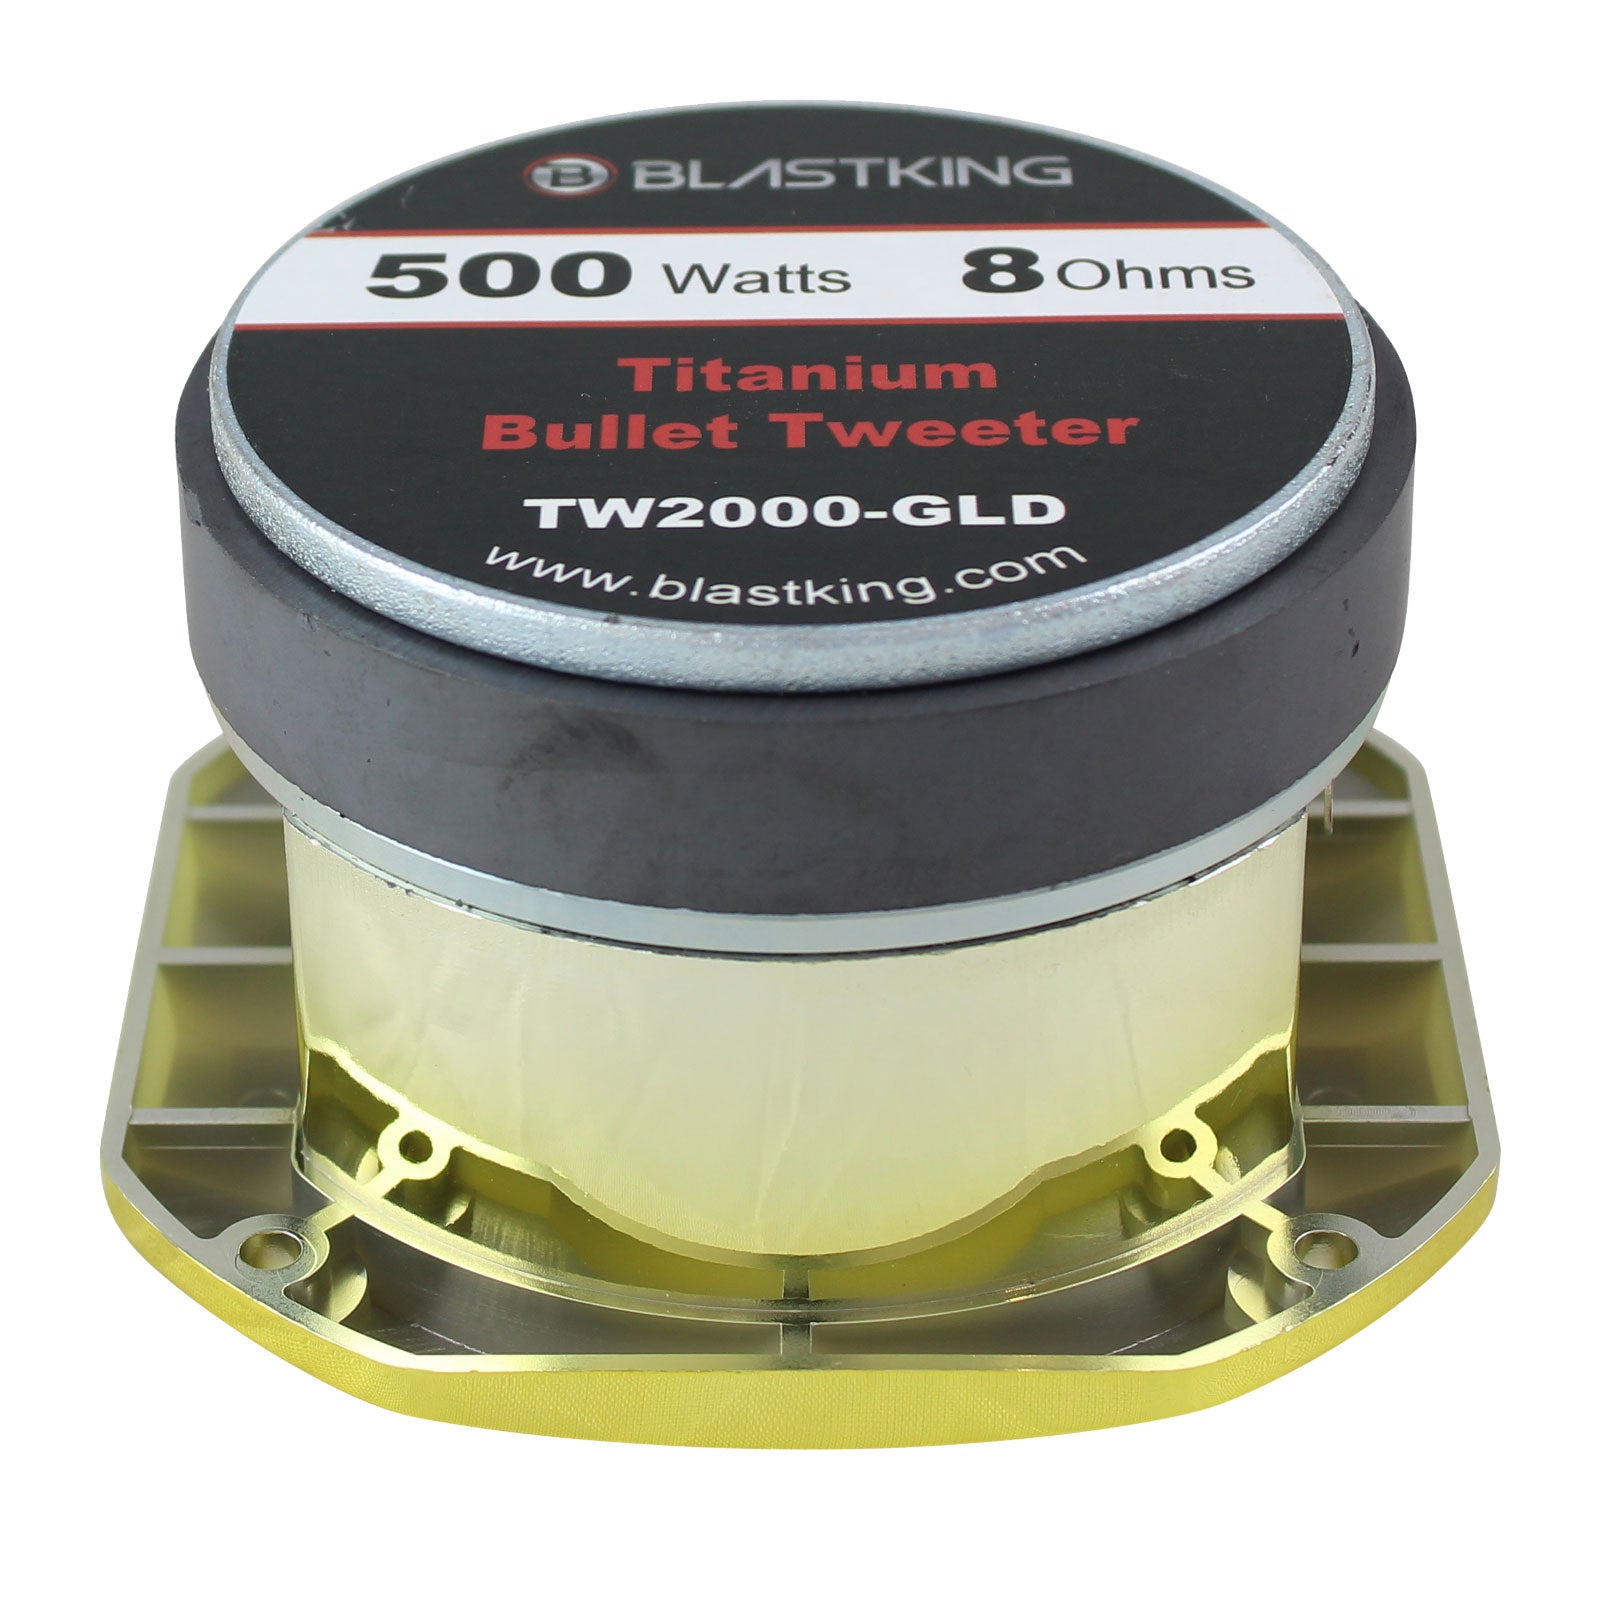 Blastking TW2000-GLD-K2 (2) 500 Watts 4x4 inch 1.5 inch VC Titanium Bullet Tweeter Gold